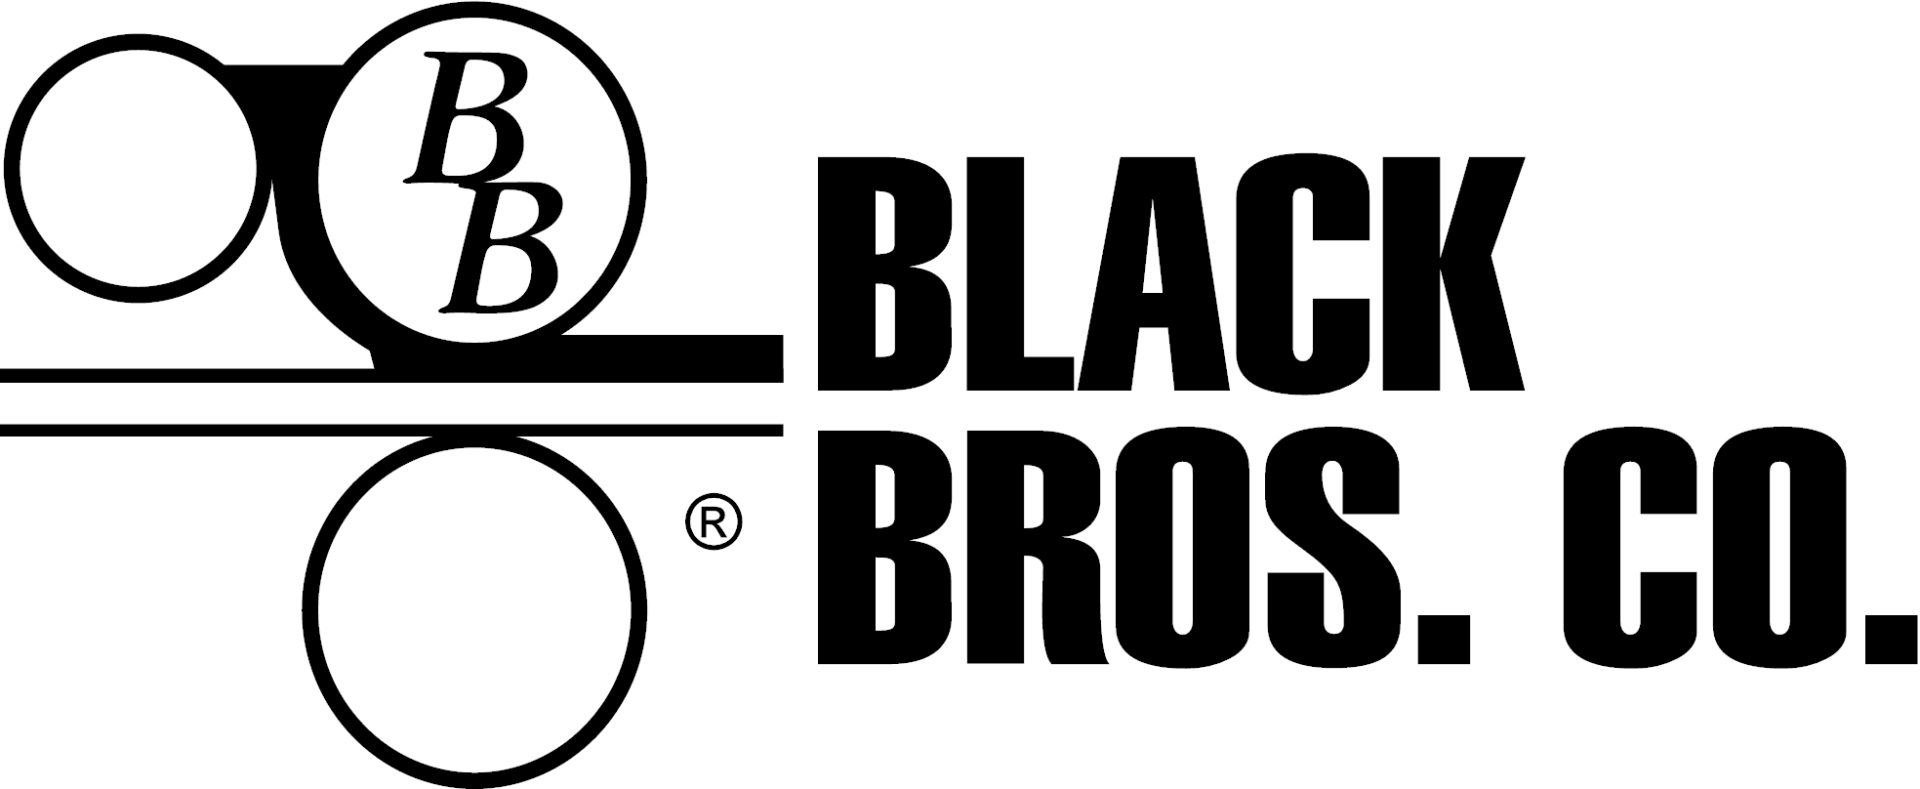 BB logo black-stacked